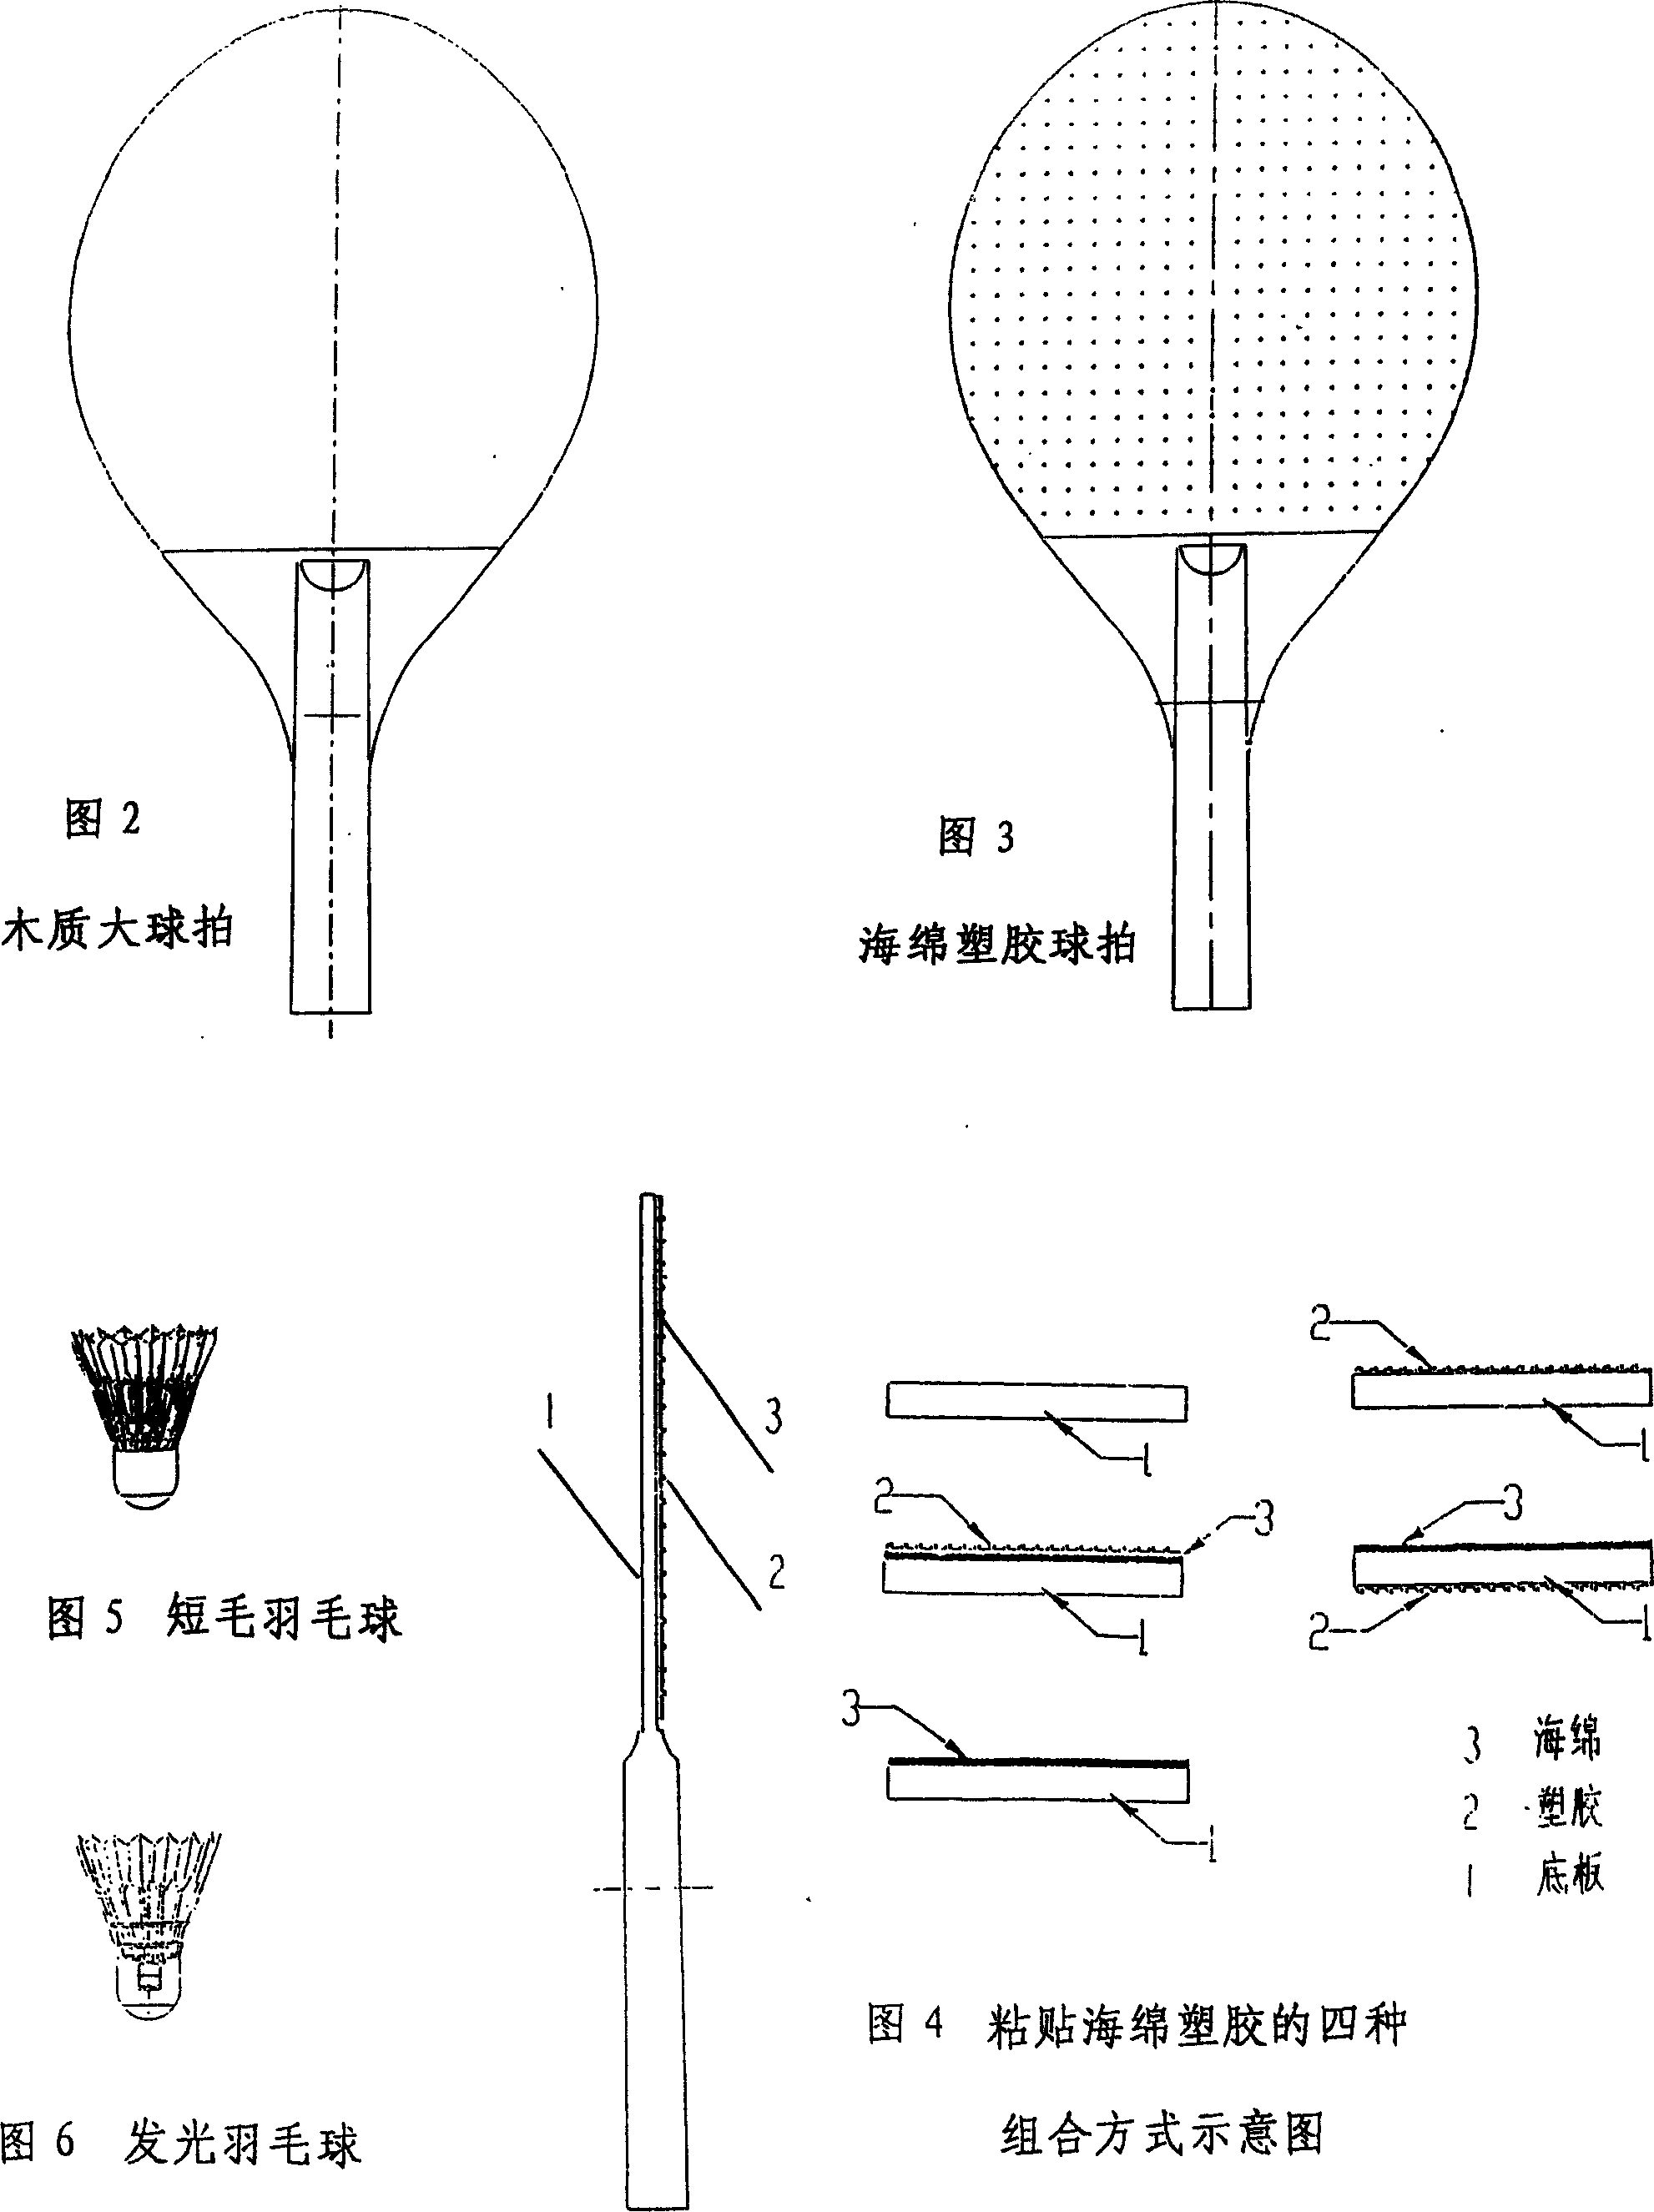 A group of plate badminton appliances